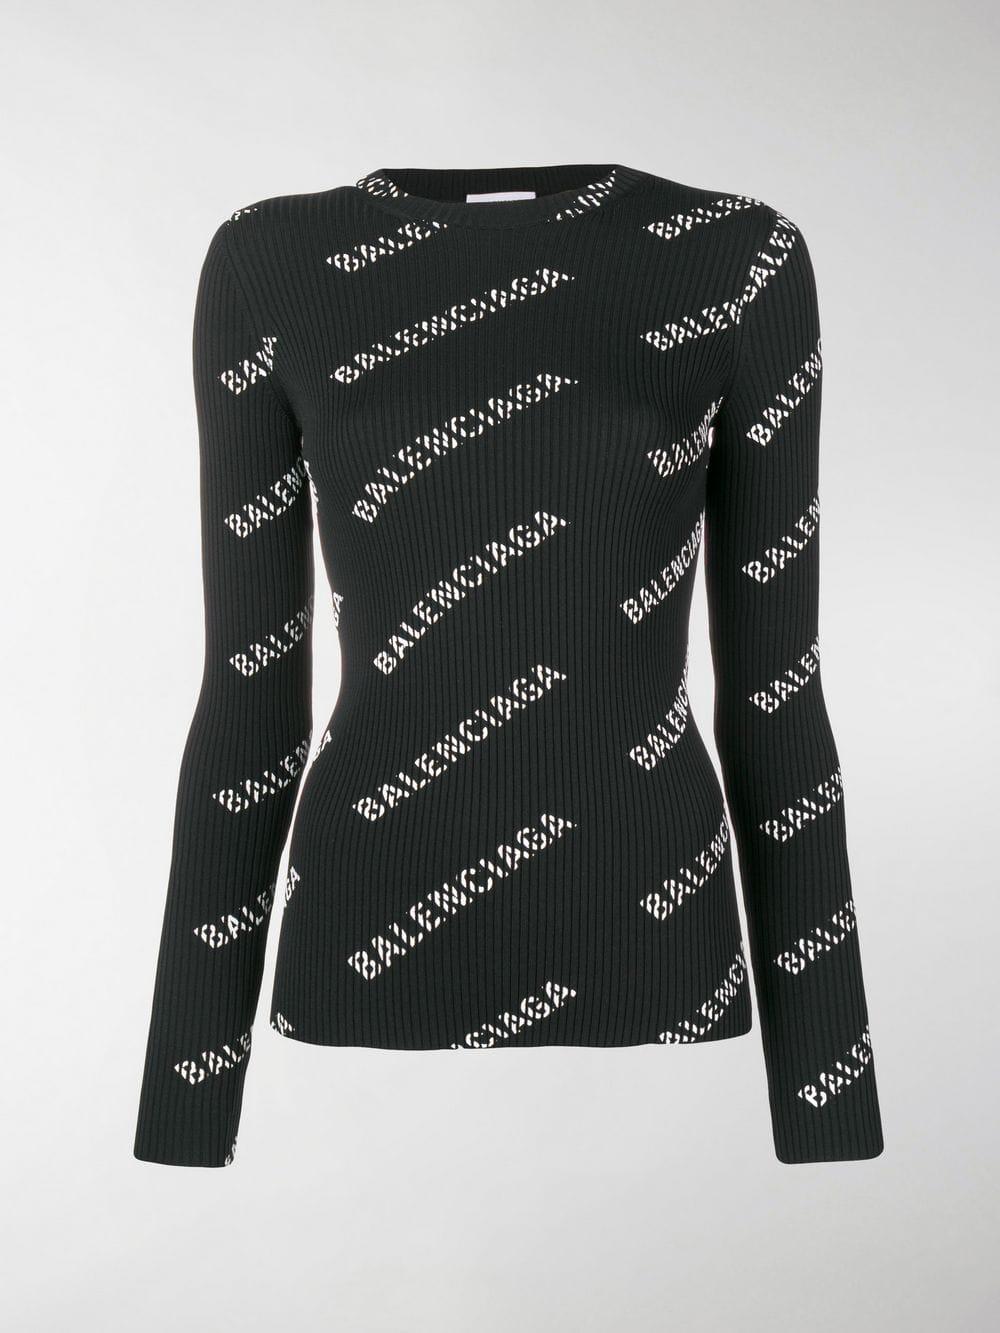 Balenciaga Logo Crewneck Sweater in Black - Lyst